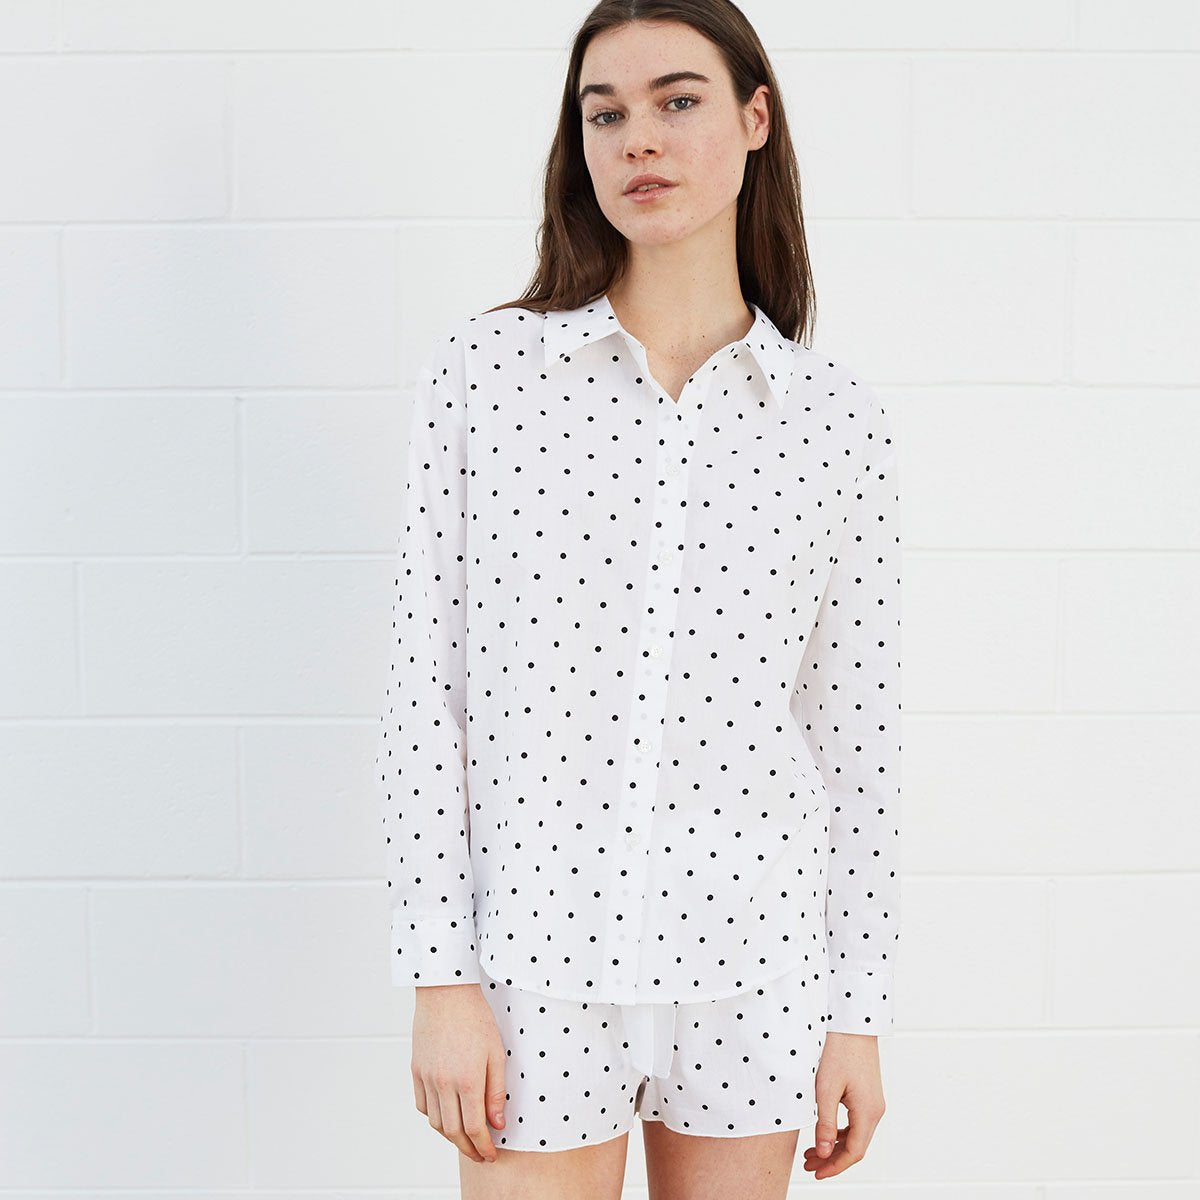 Woman wearing polka dot shirt